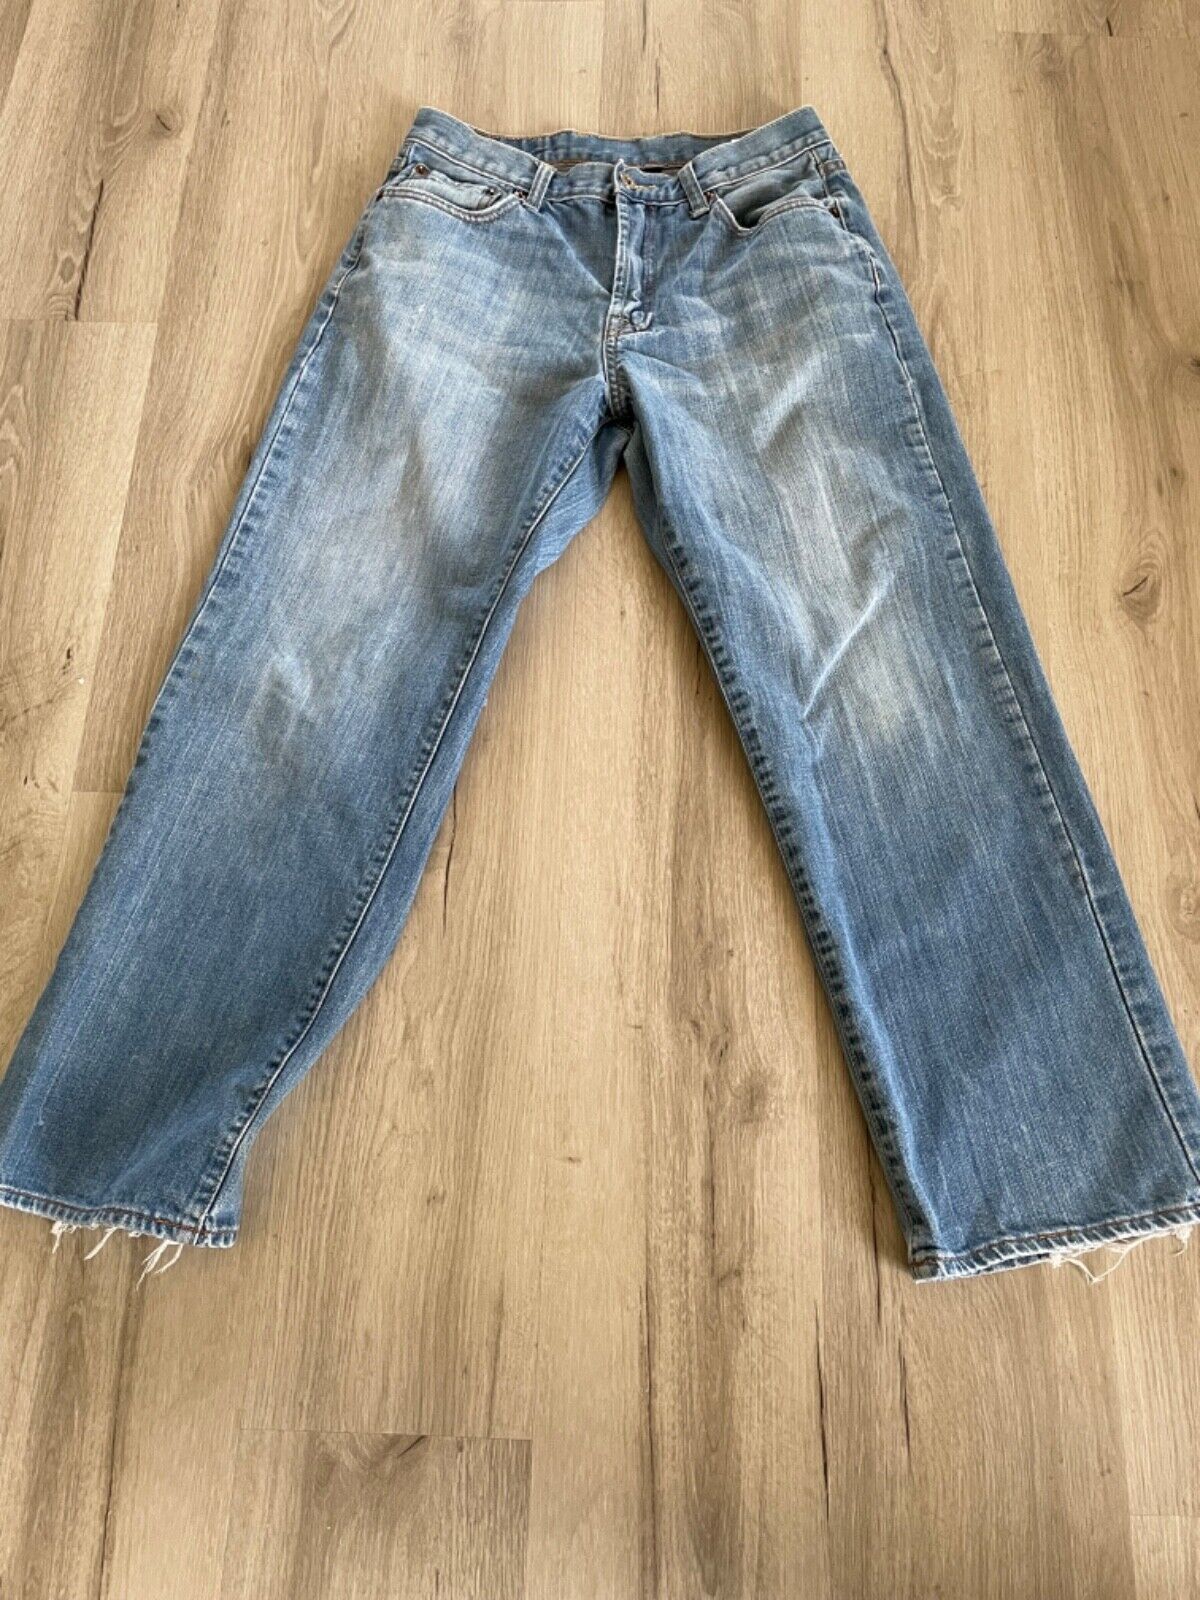 Lucky Brand Miner straight leg blue jean pants size 32x30